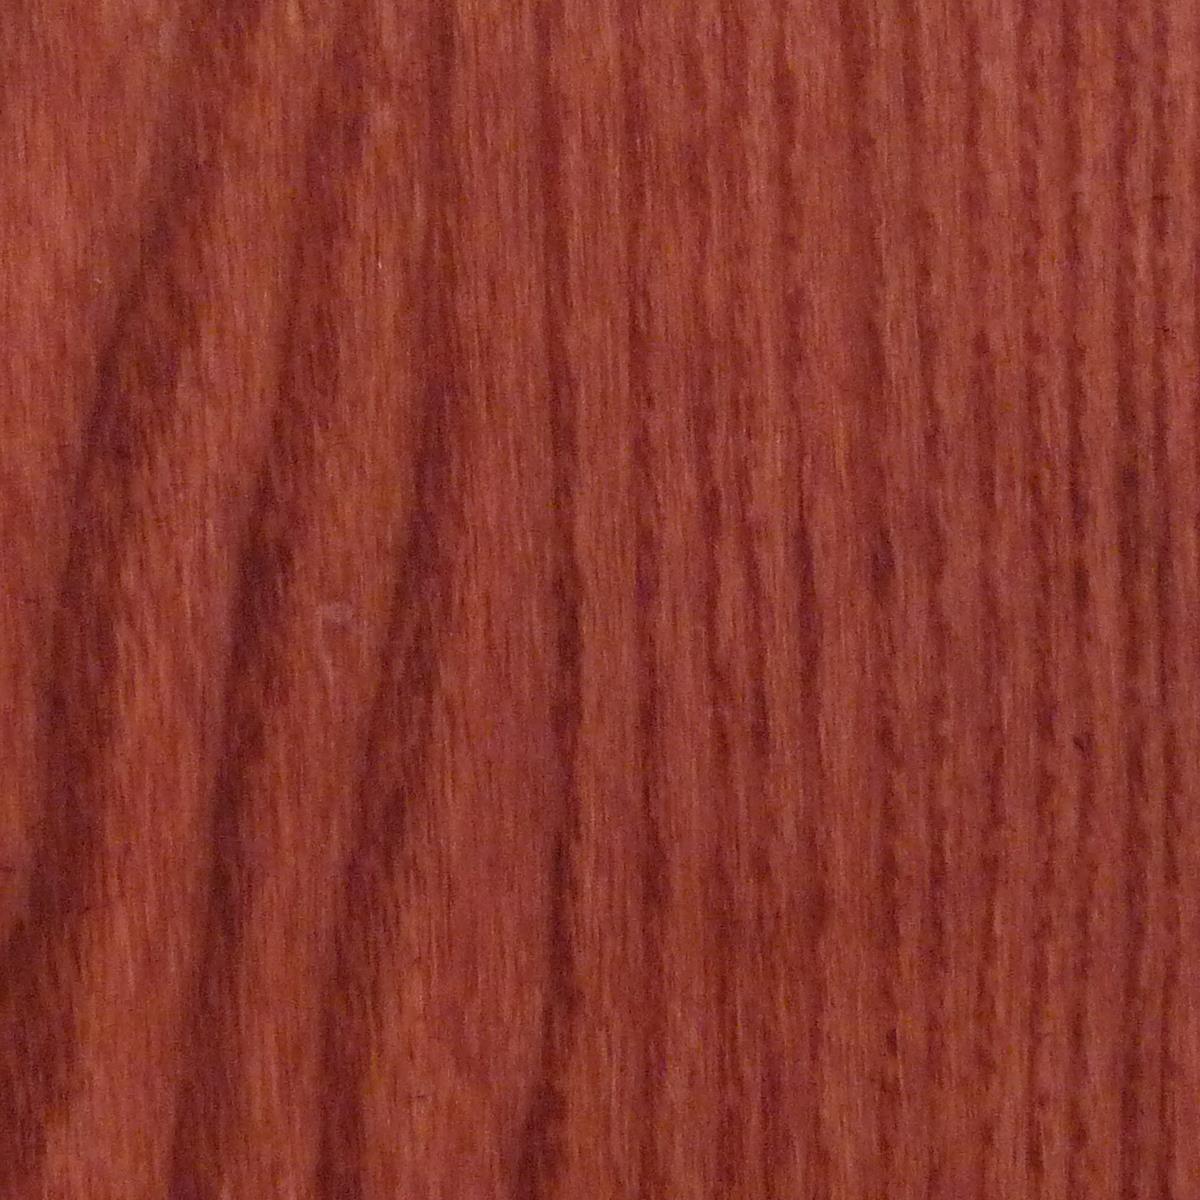 dartfords Wine Red Interior Spirit Based Wood Dye - 230ml Tin